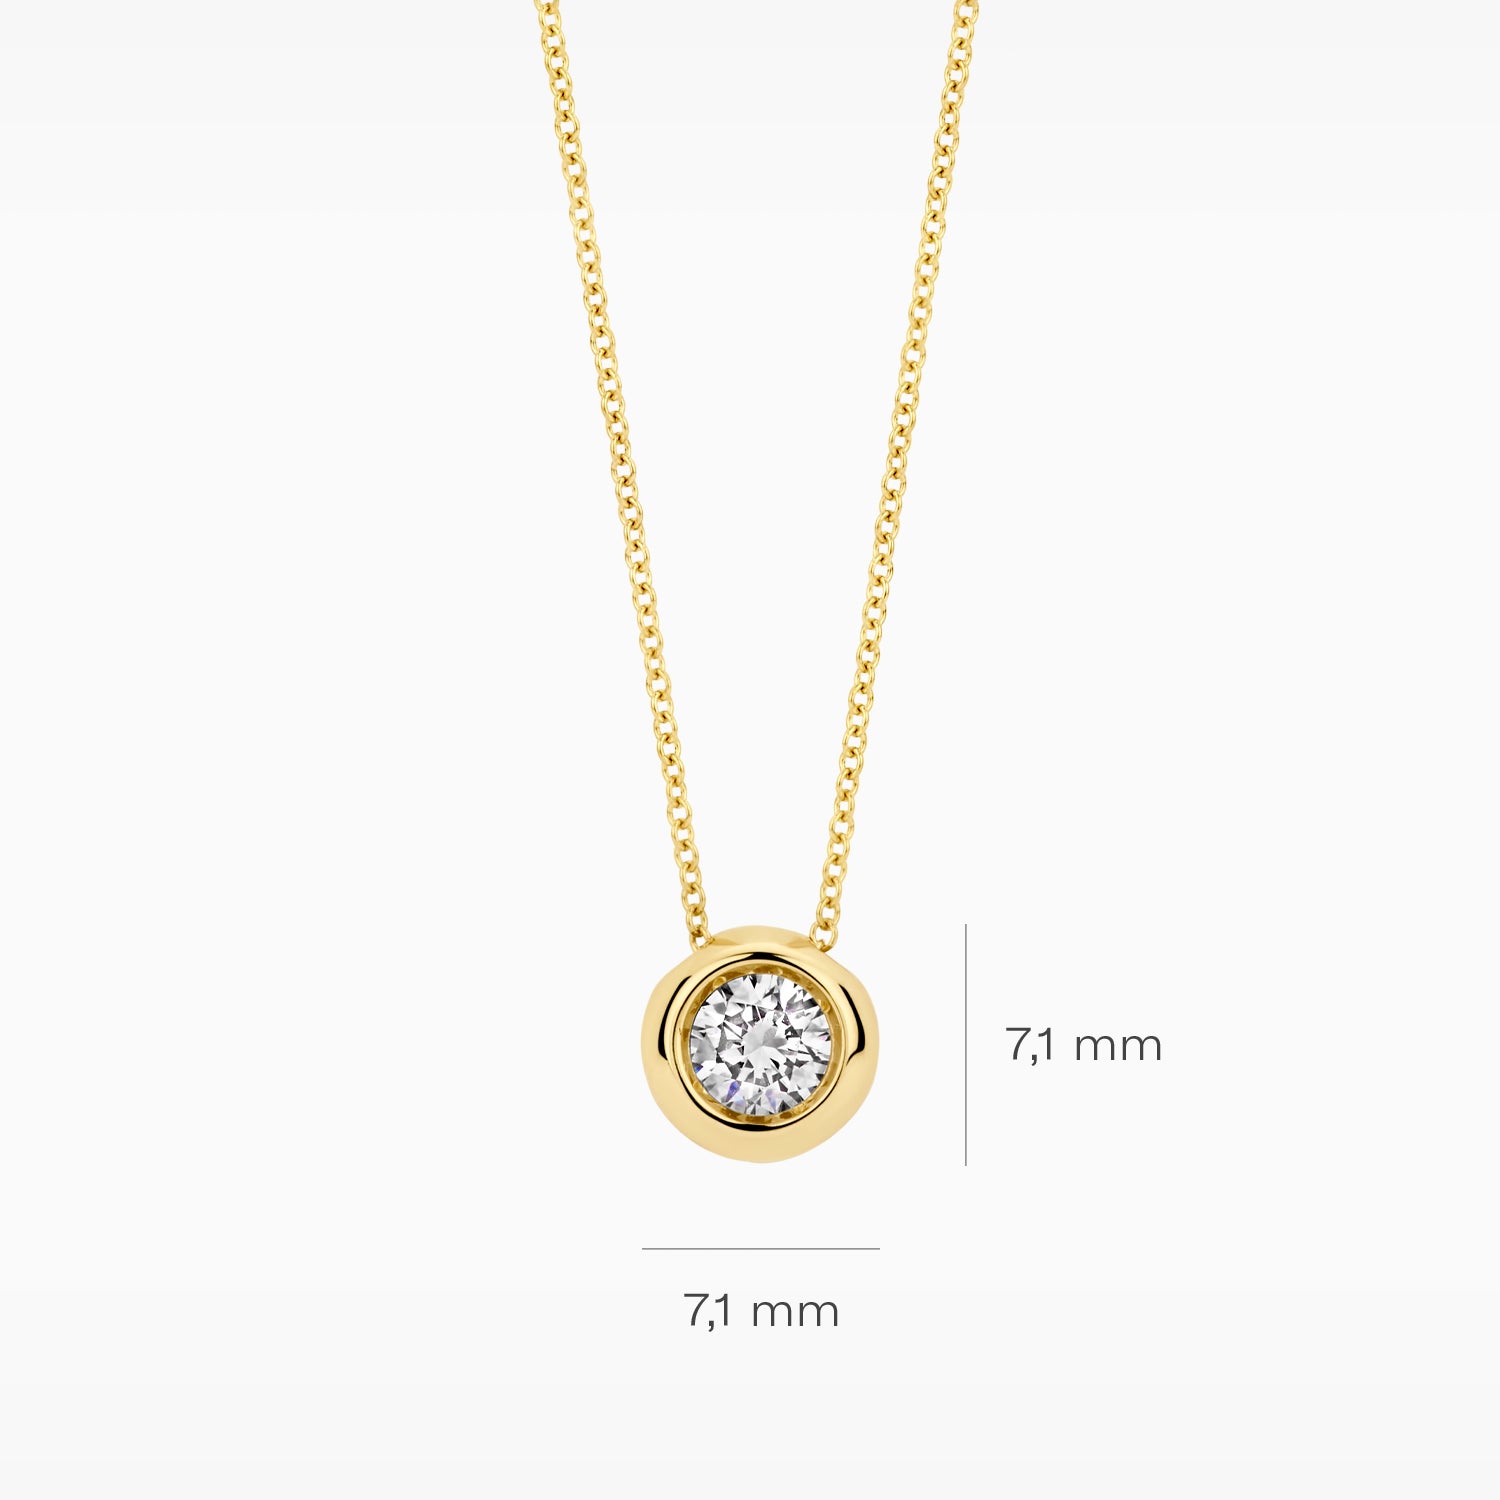 Lab diamonds necklace LG3007Y - 14k Yellow gold